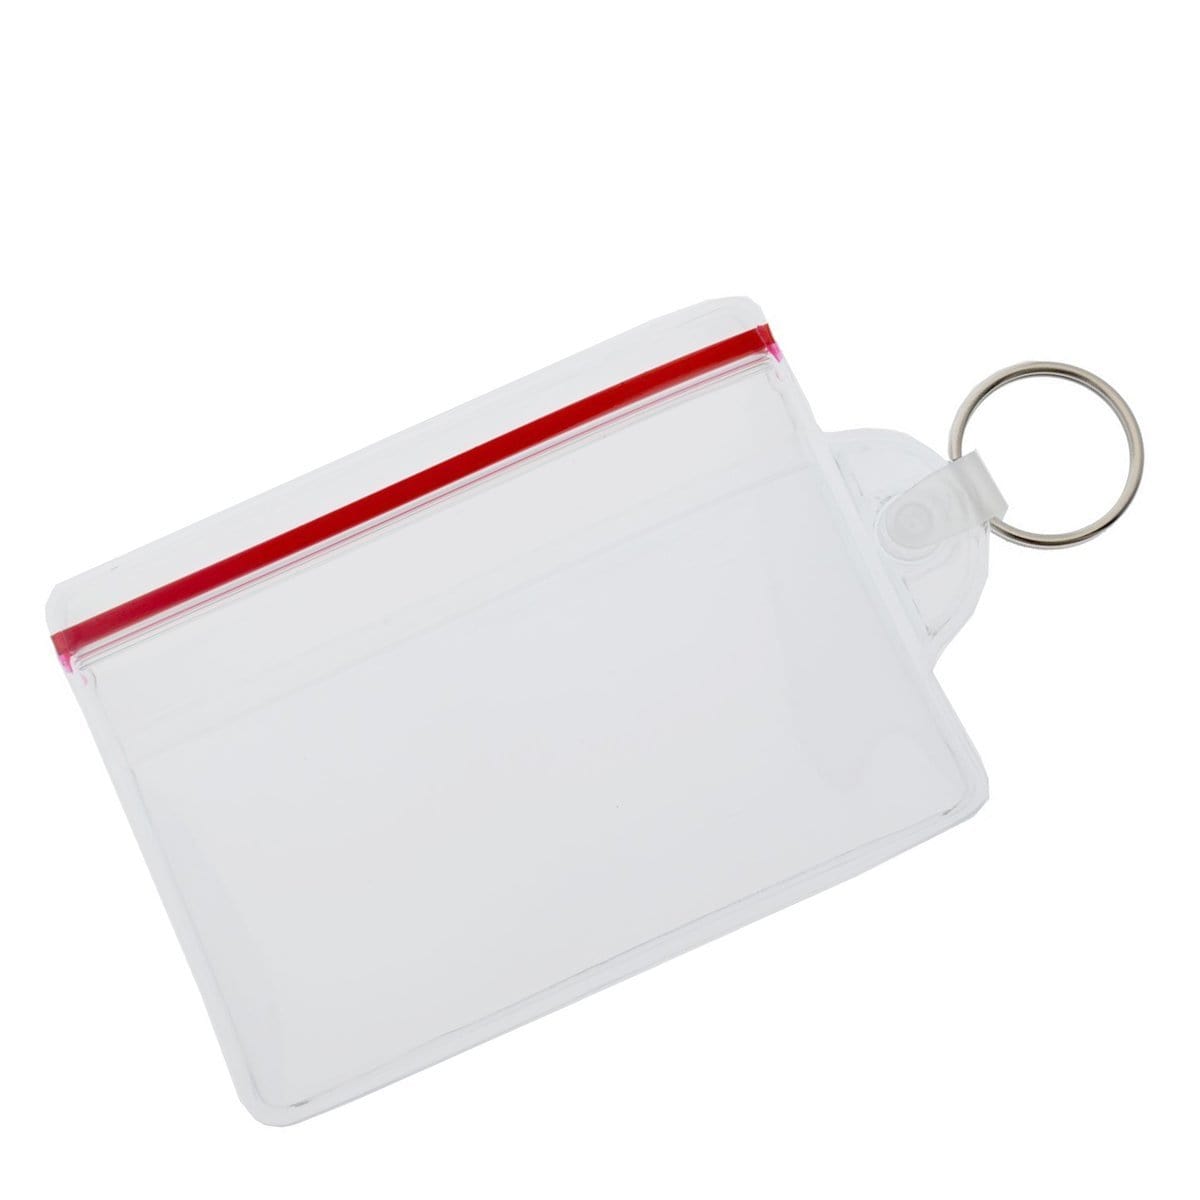 Hard Plastic Card ID Badge Holder with Keyring Heavy Duty Clear Card Holder Rigid Fuel Card Protector Keychain Secure Credit Card ID Holder Keychain